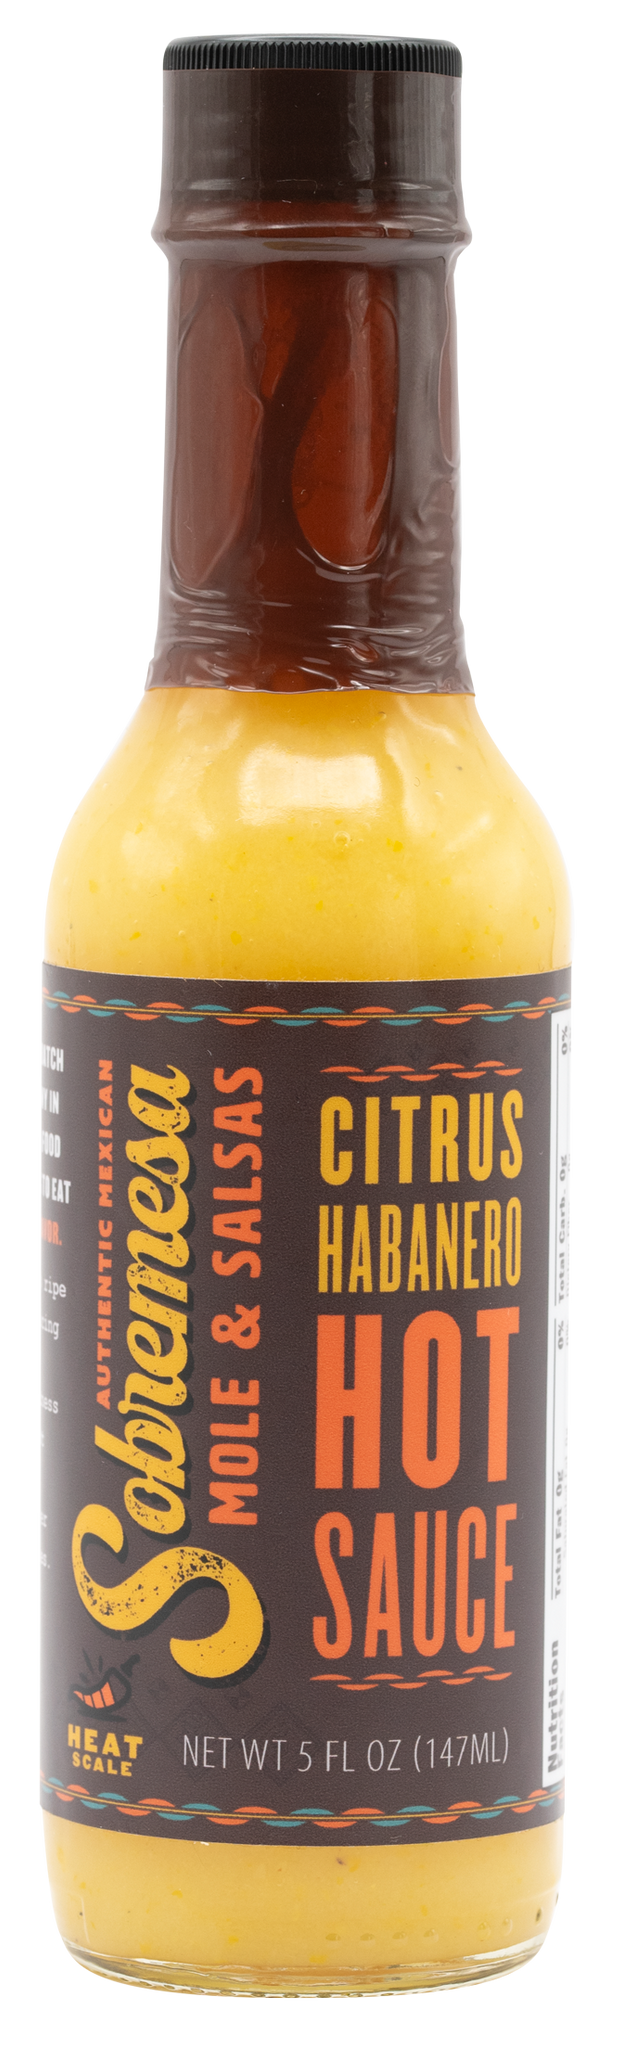 Citrus Habanero Hot Sauce